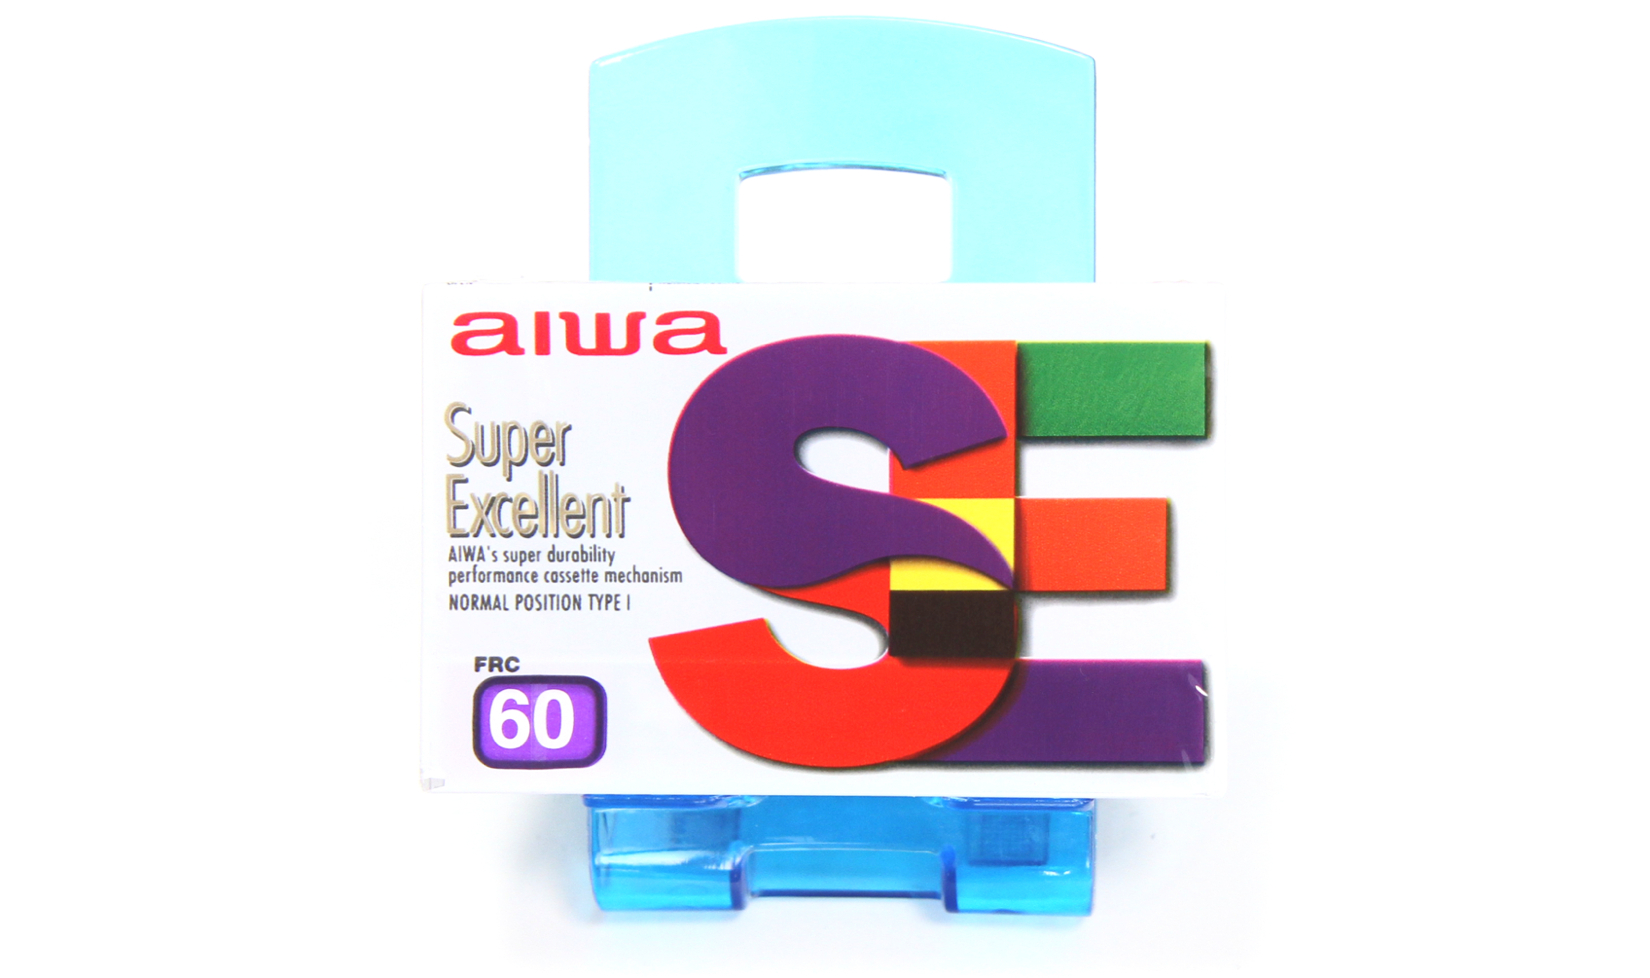 AIWA SE-60 Position Normal